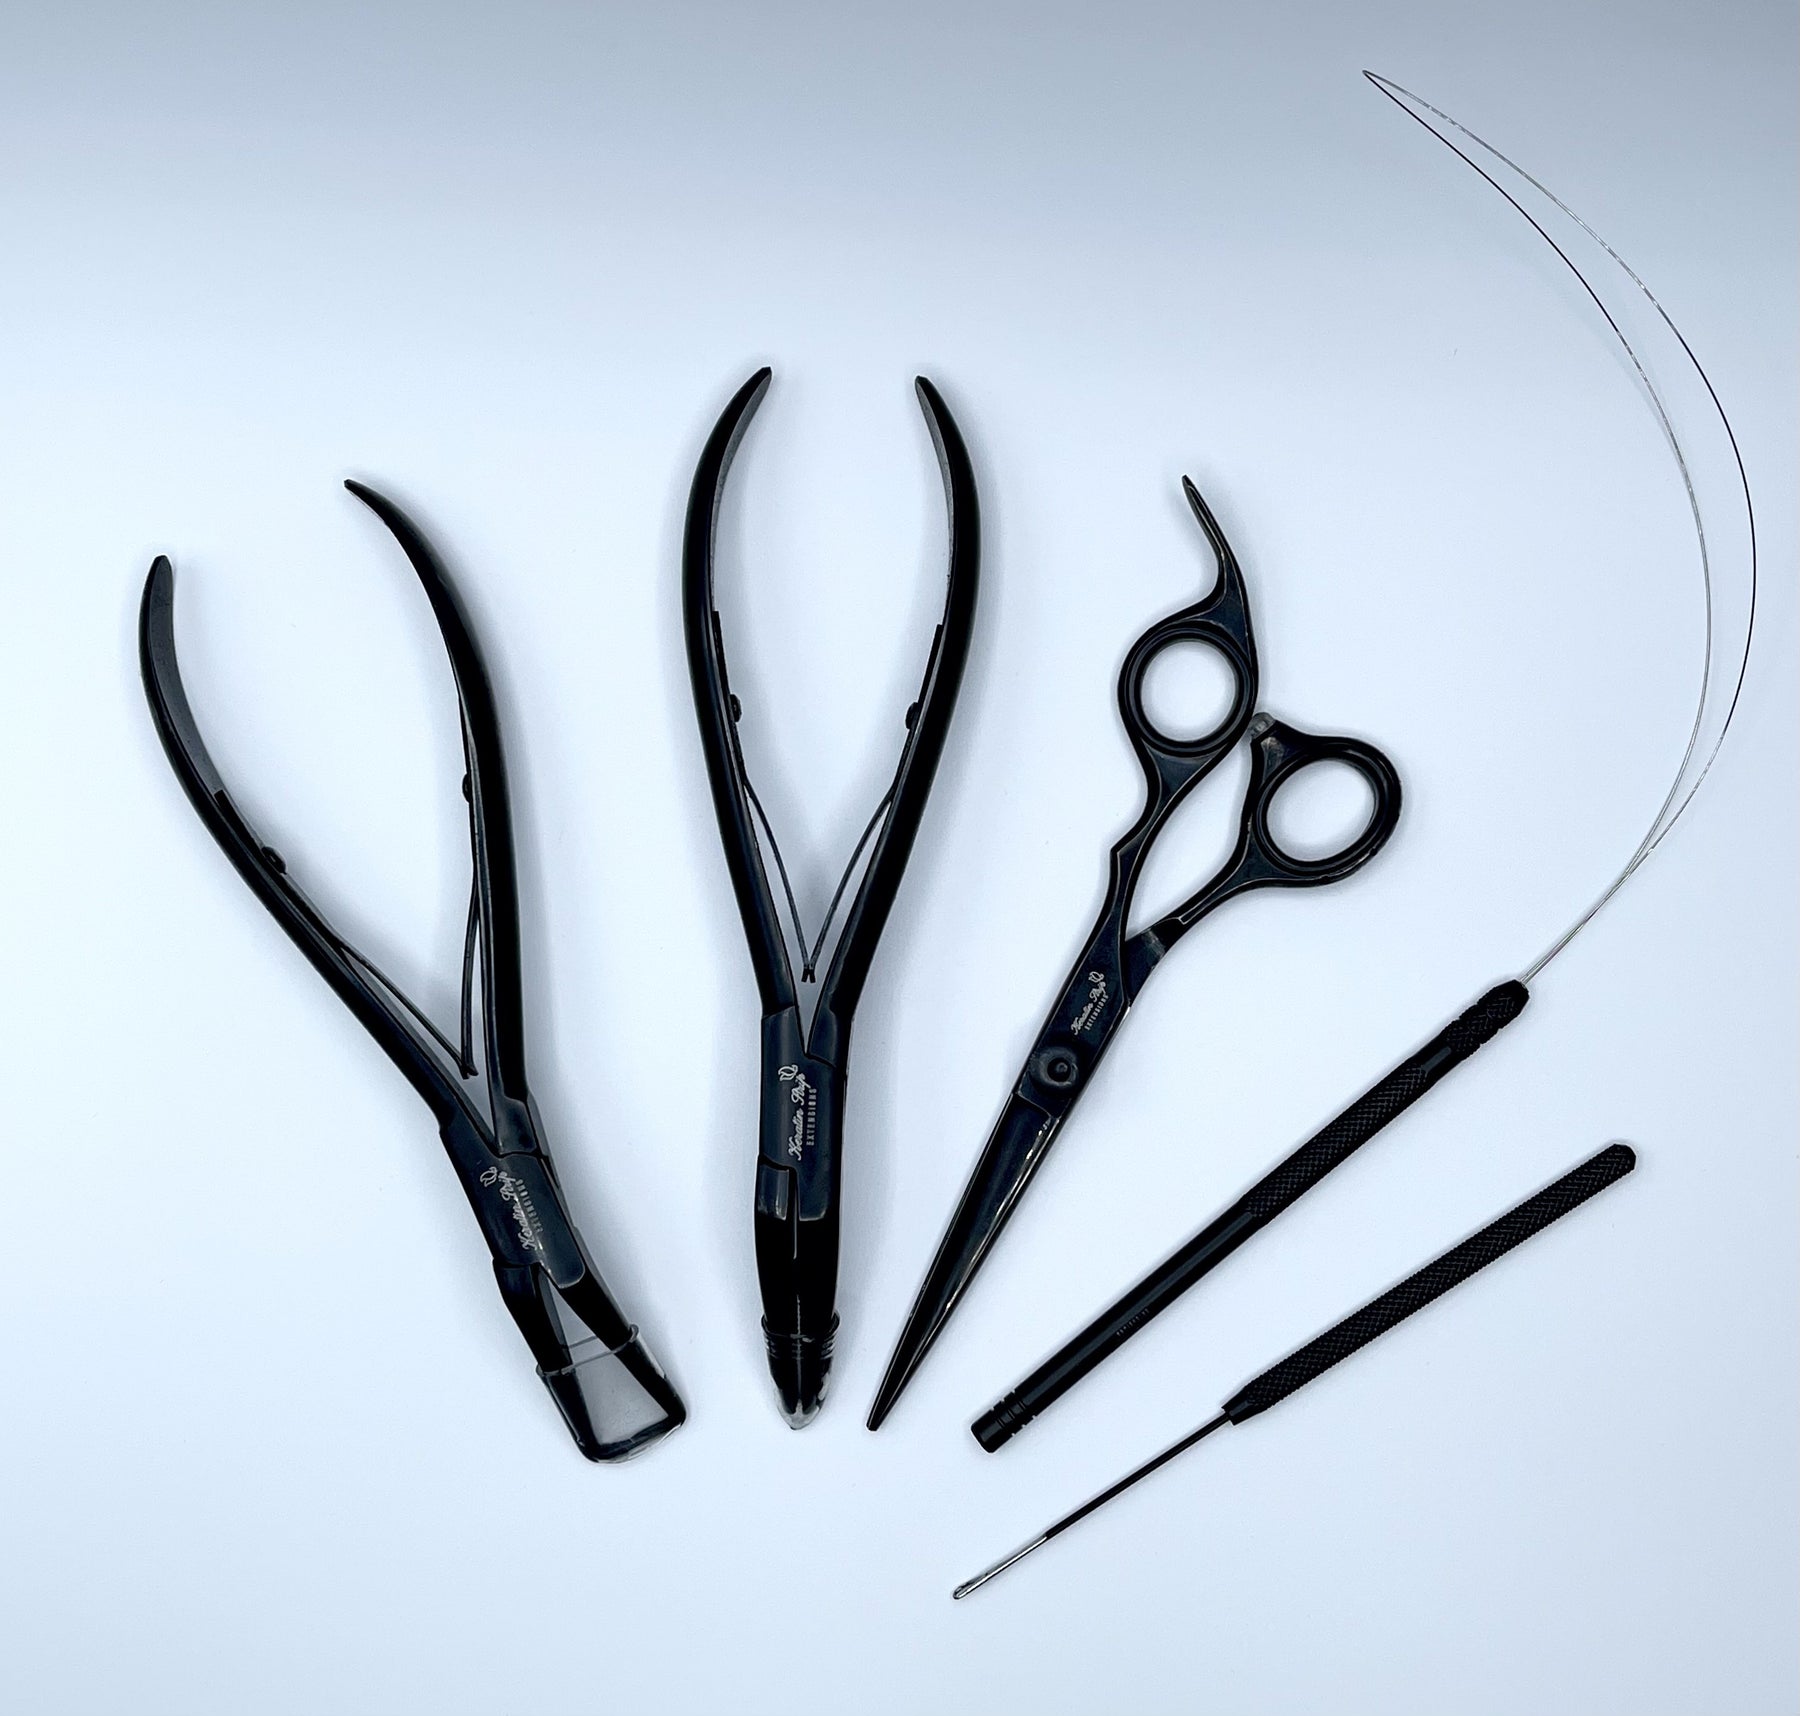 tape hair extension pliers tool kit tweezers for hair extensions